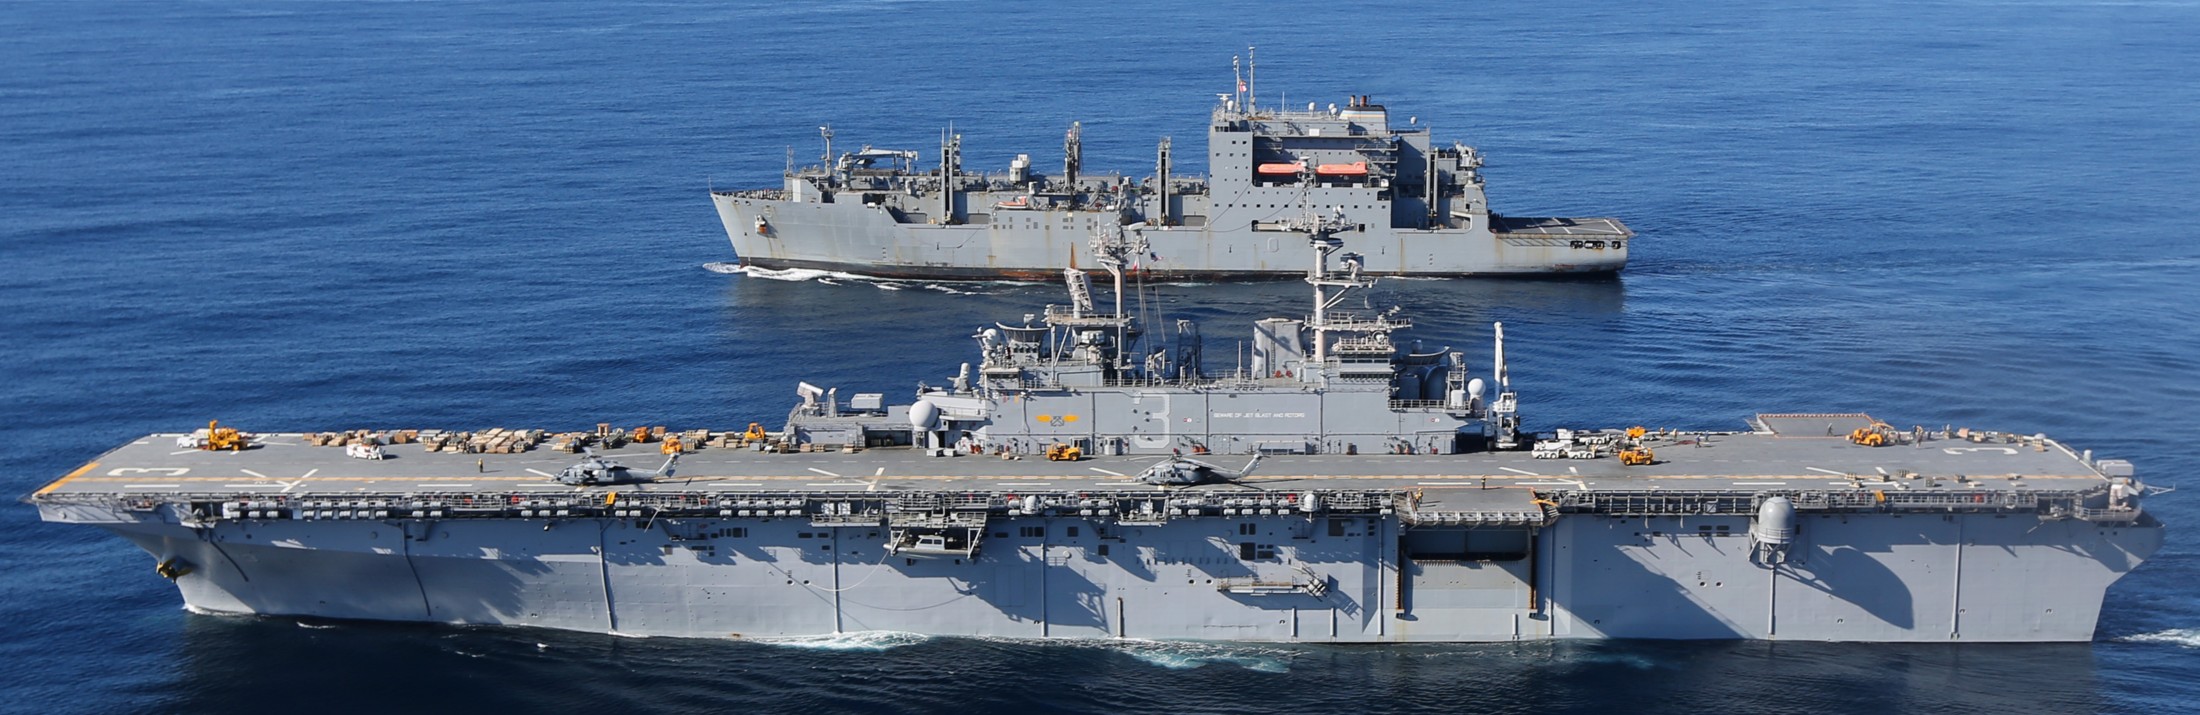 lhd-3 uss kearsarge wasp class amphibious assault ship us navy marines 91